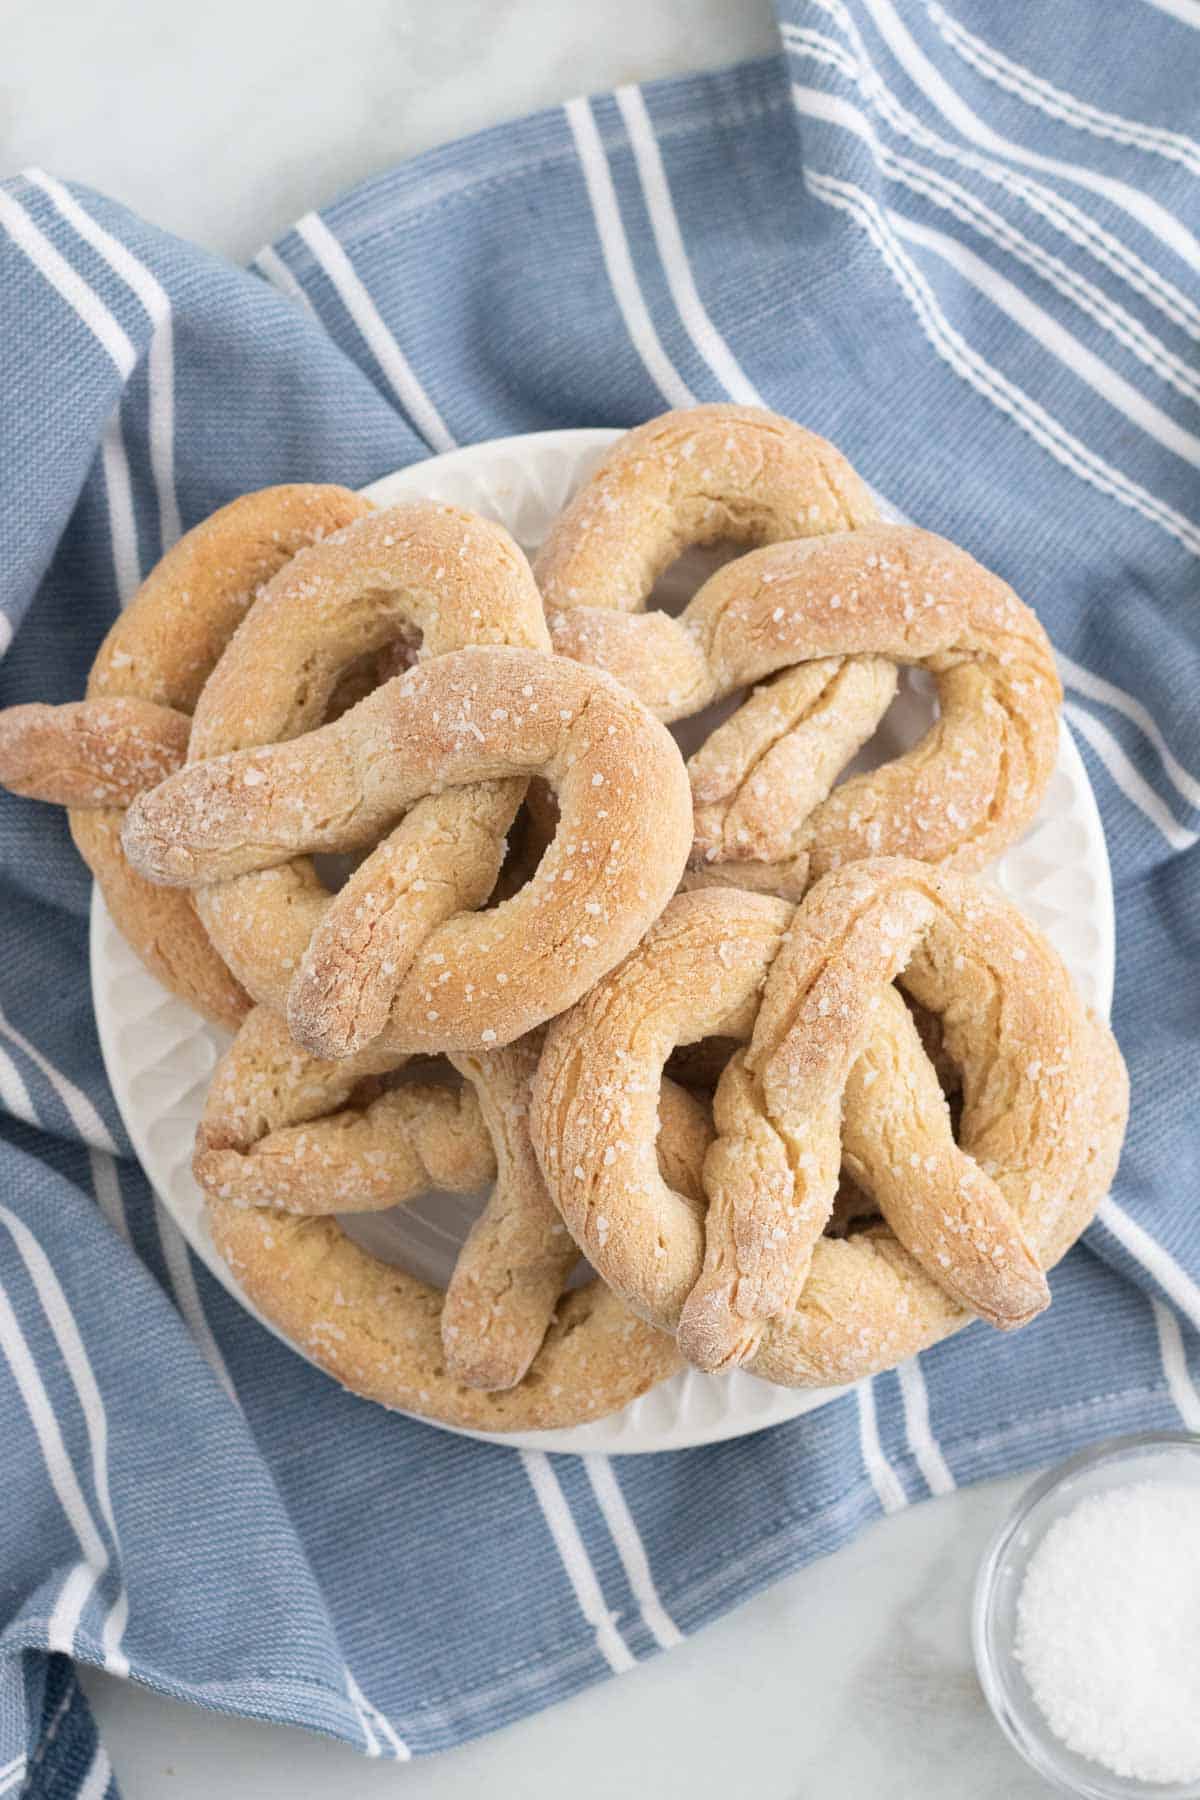 Gluten free soft pretzels on a plate.